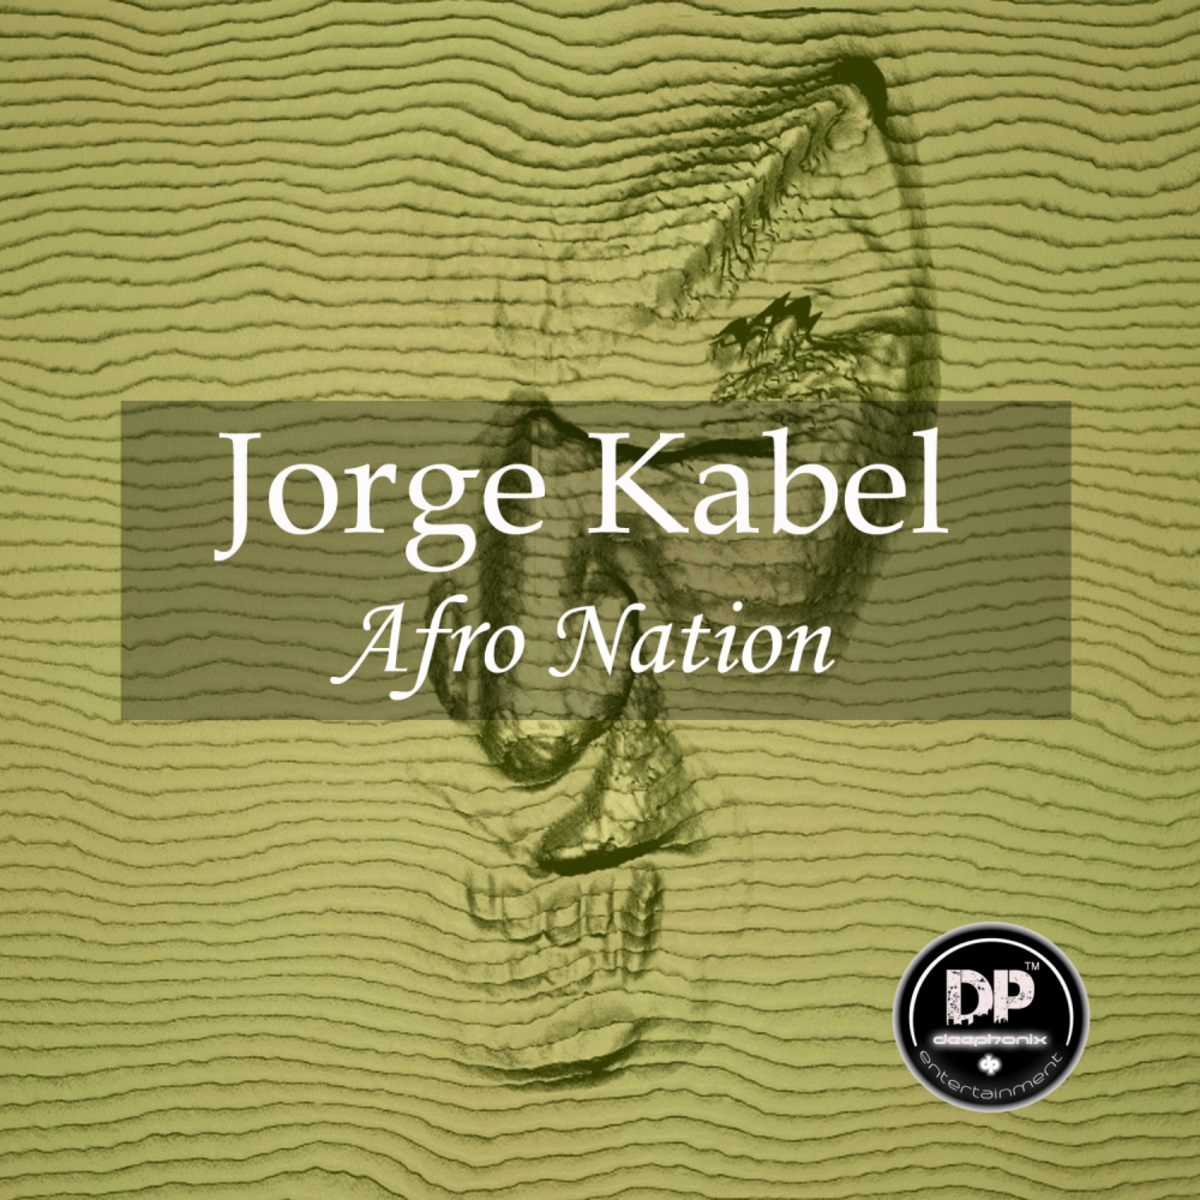 Jorge Kabel - Afro Nation / Deephonix